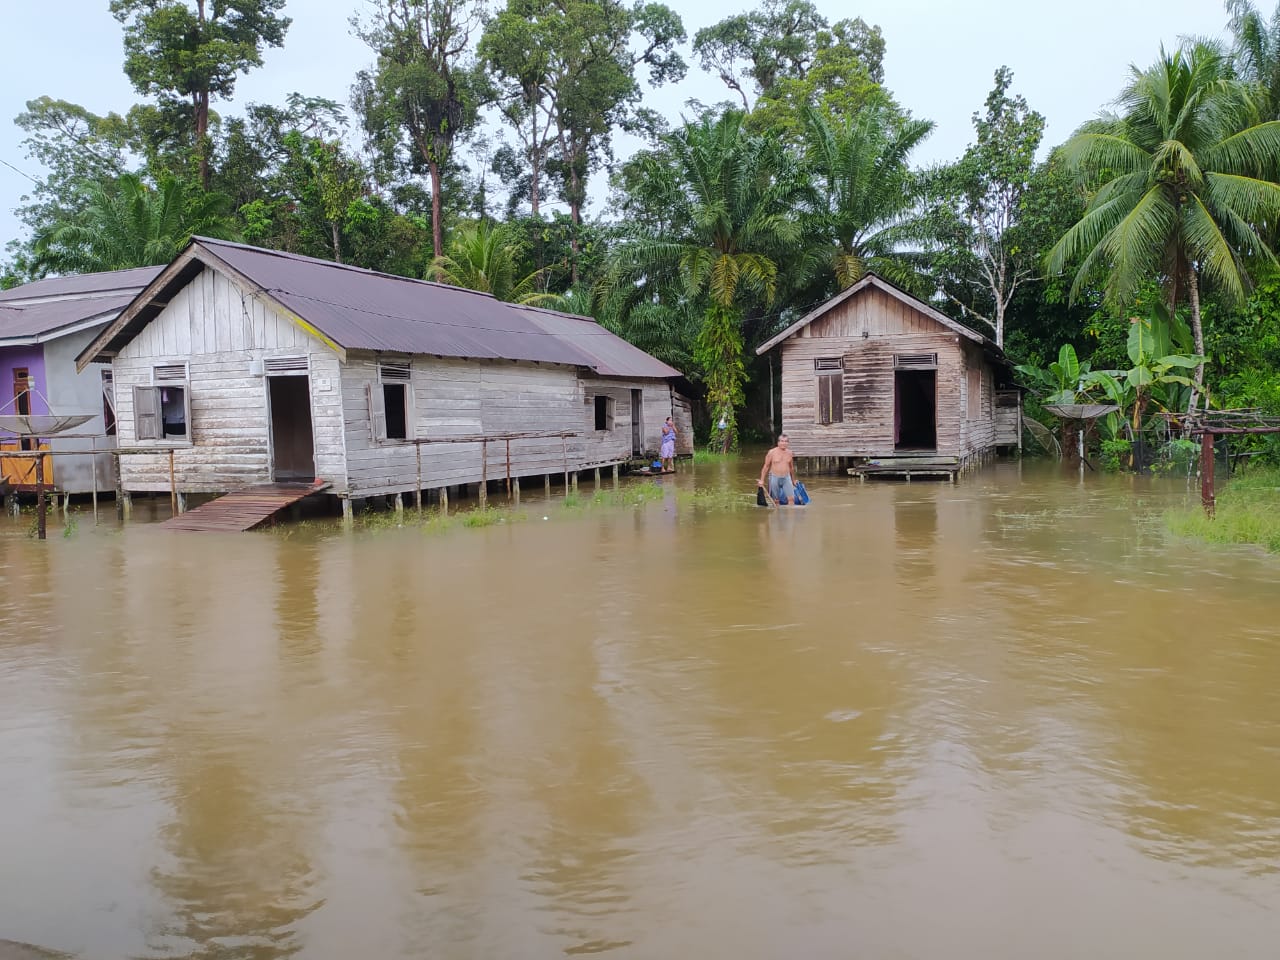 Banjir dan Tanah Longsor telah Melanda Beberapa Desa di Kec. Ngabang, Kab. Landak. Kalimantan Barat.